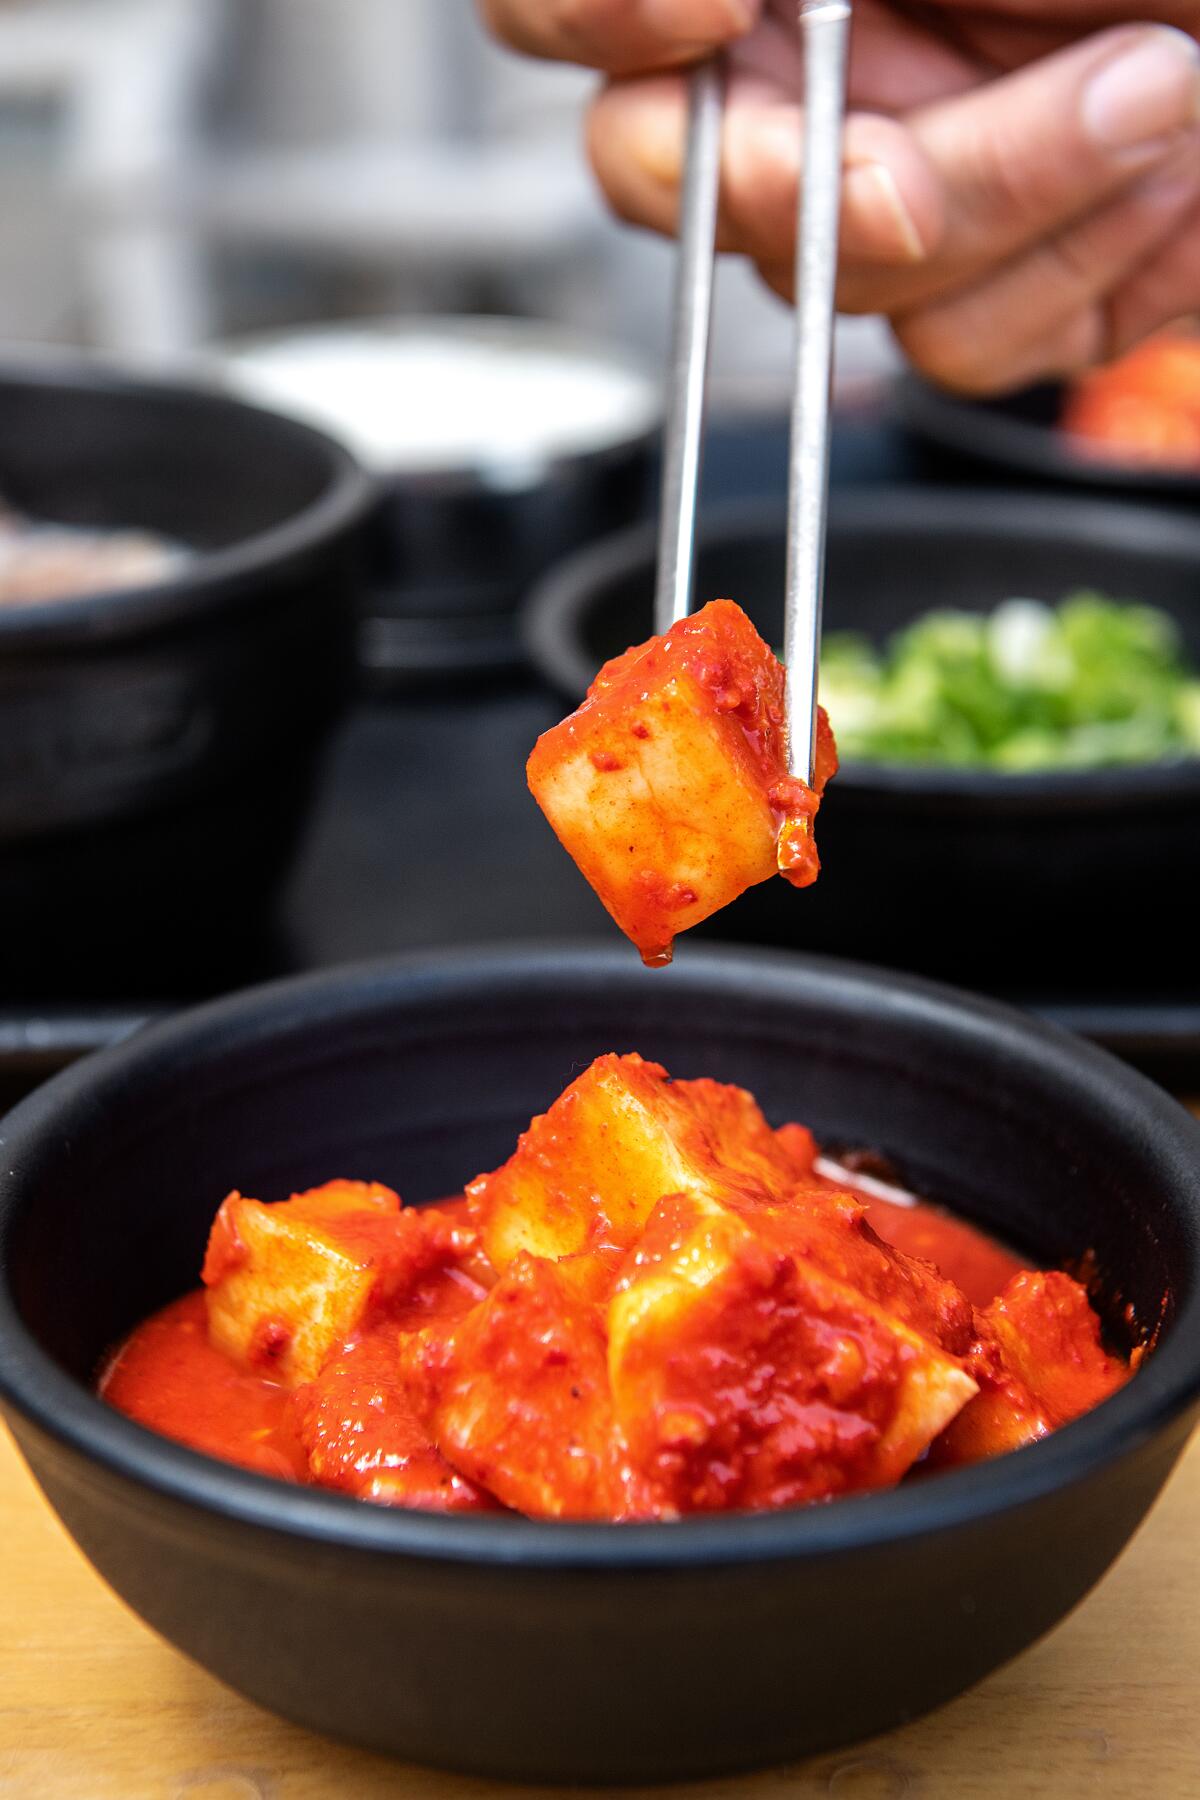 Han Bat Sul Lung Tang's kkakdugi, or radish kimchi.